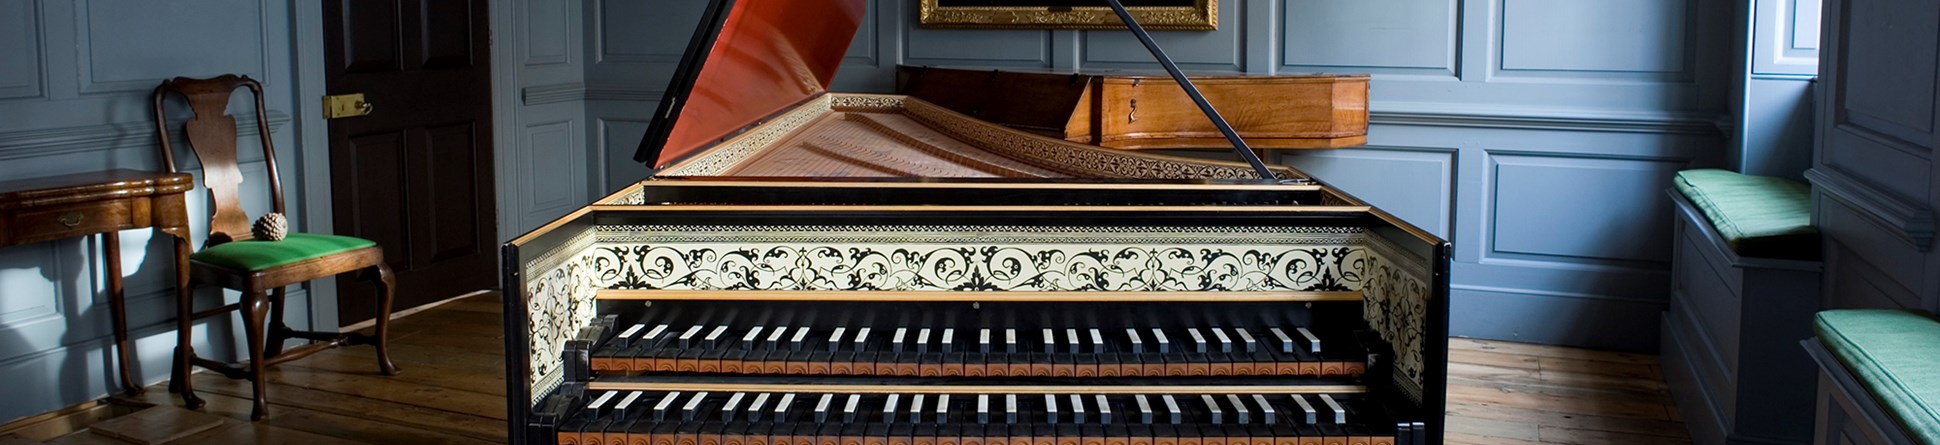 Harpsichord in 25 Brook Street, London where Handel lived